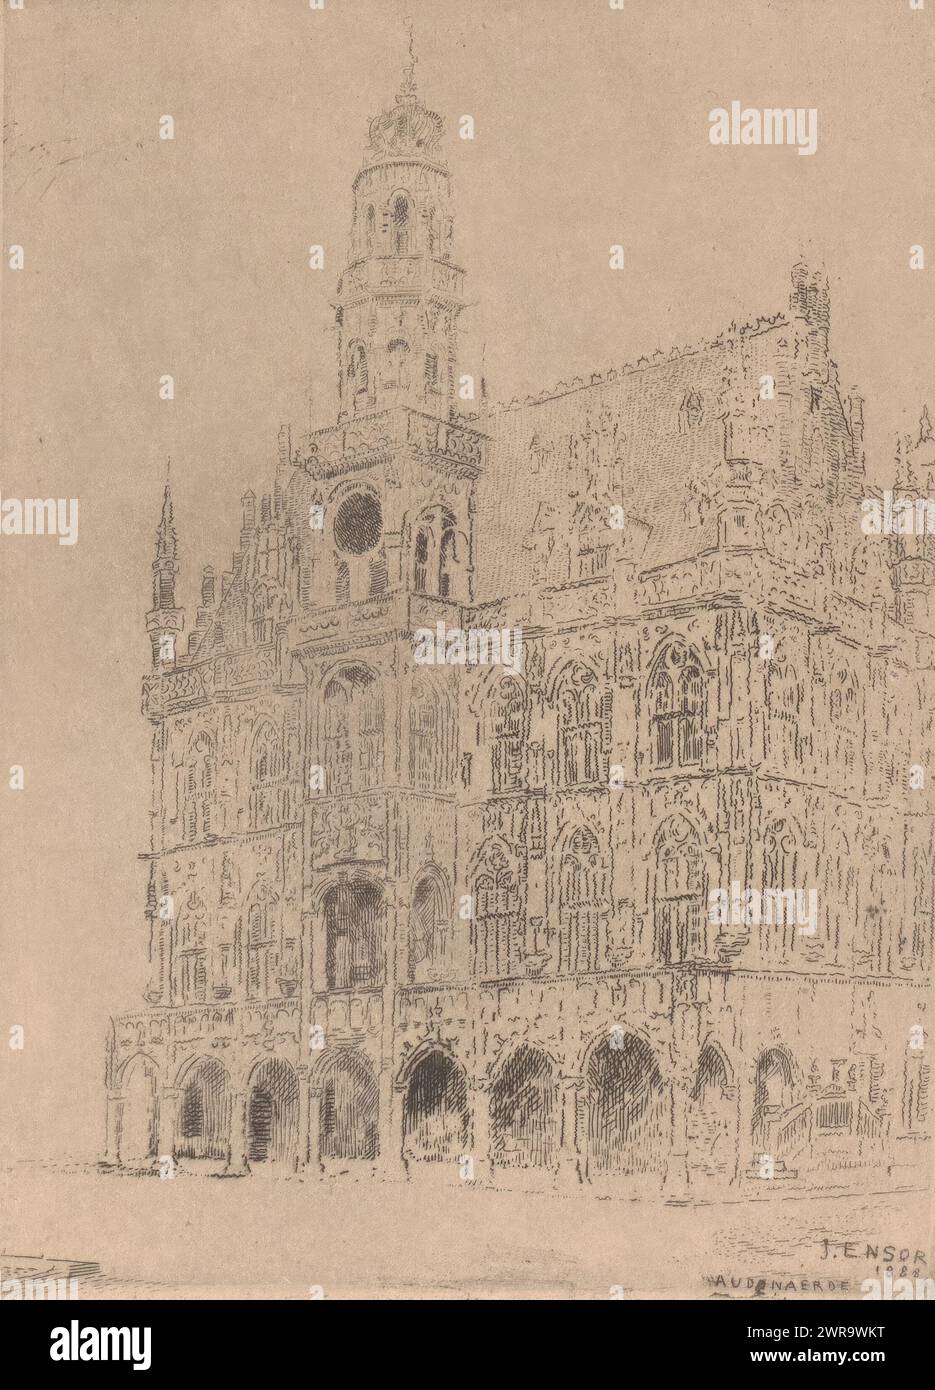 Oudenaarde Town Hall, Hotel de ville d'Audenaerde, print maker: James Ensor, 1888, paper, etching, height 160 mm × width 117 mm, print Stock Photo